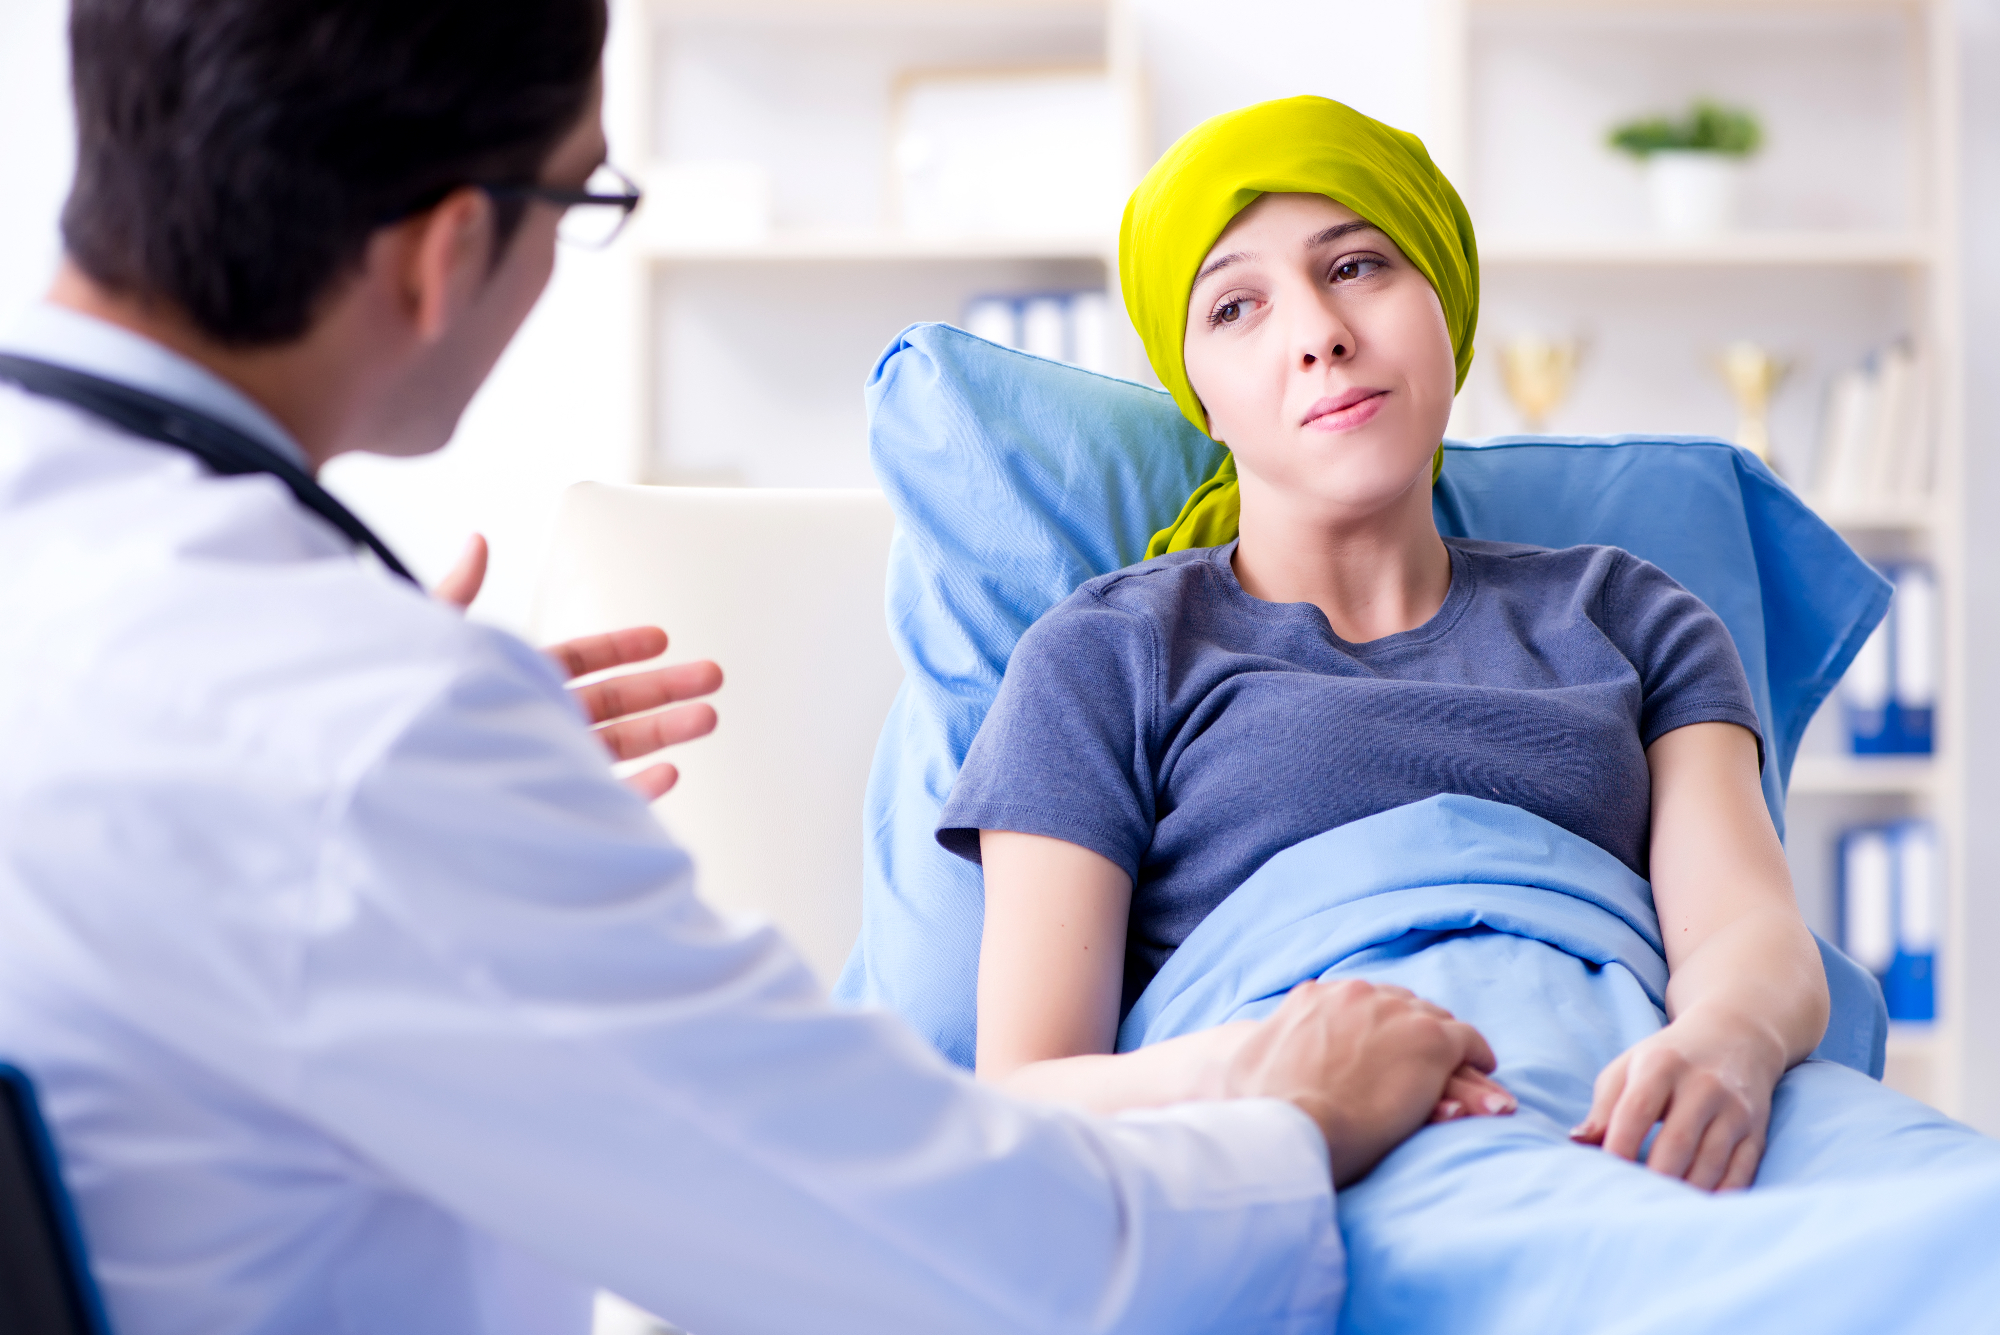 Kemoterapija pomaga mnogim bolnikom z rakavimi obolenji